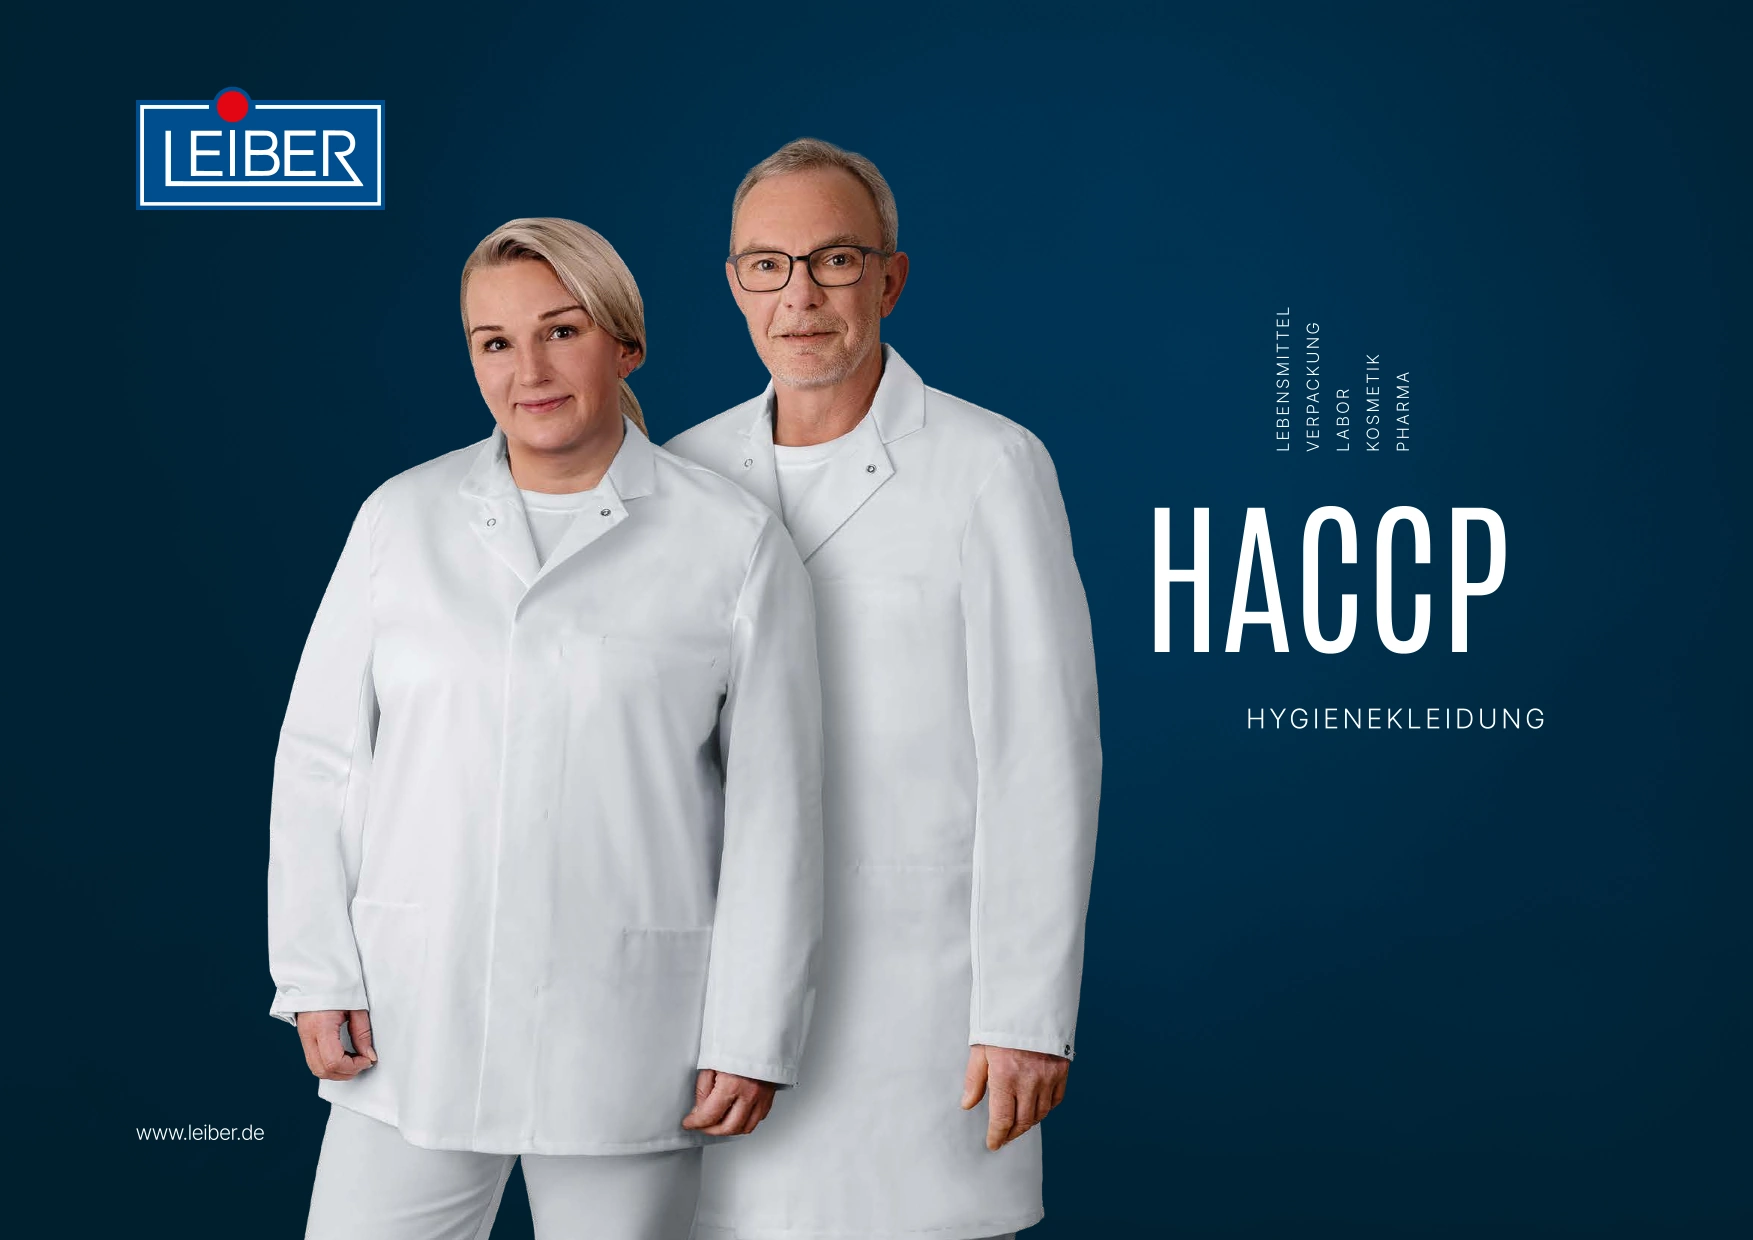 Leiber - HACCP